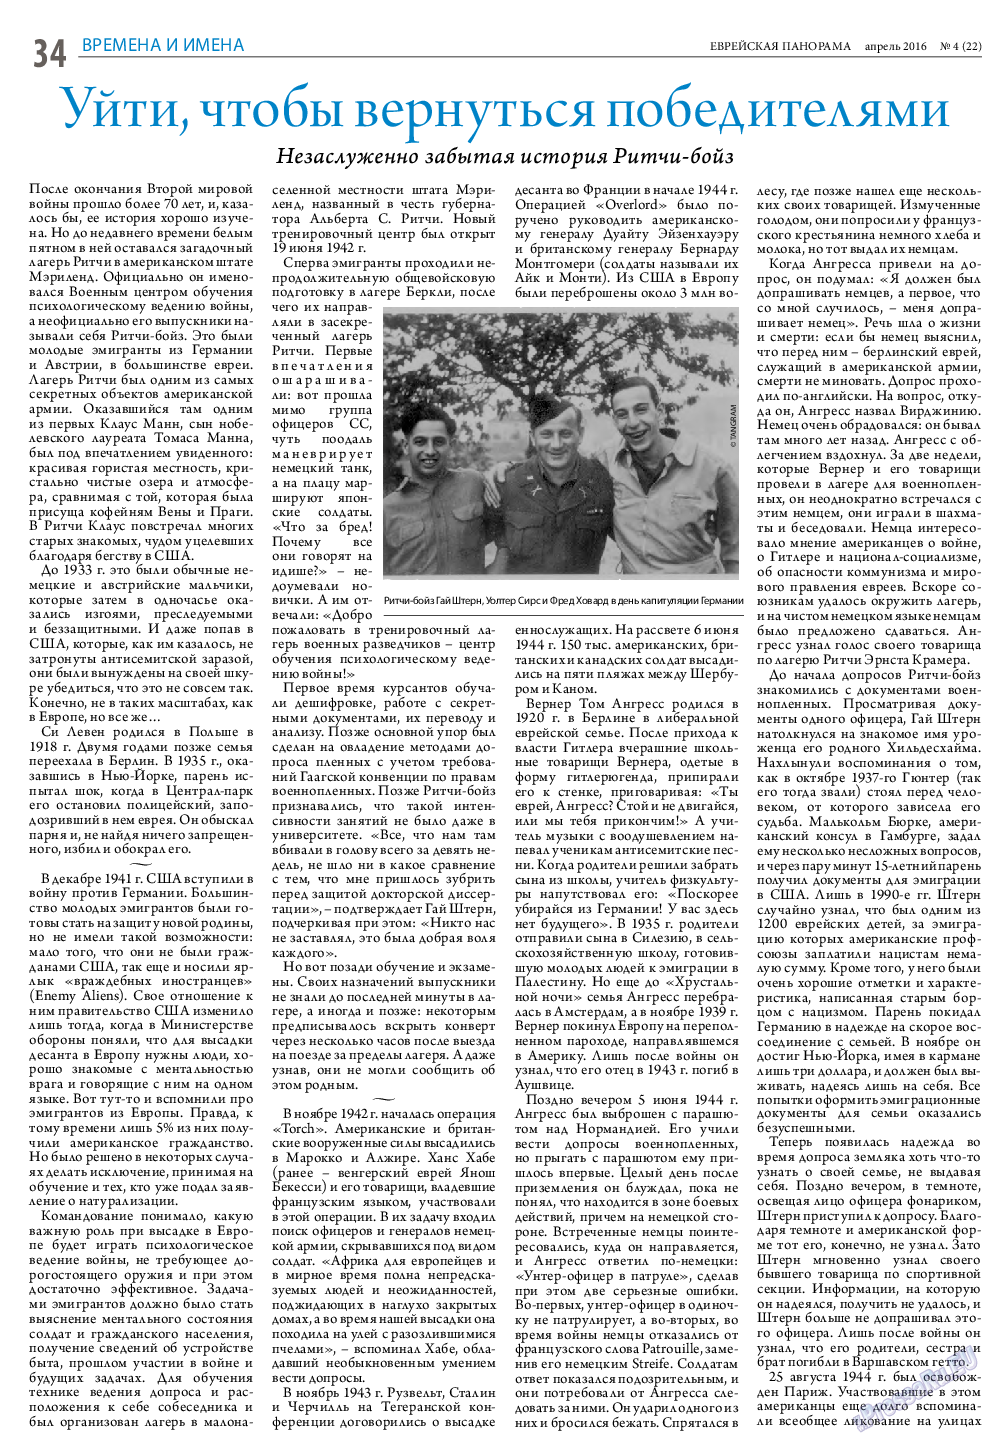 Еврейская панорама, газета. 2016 №4 стр.34